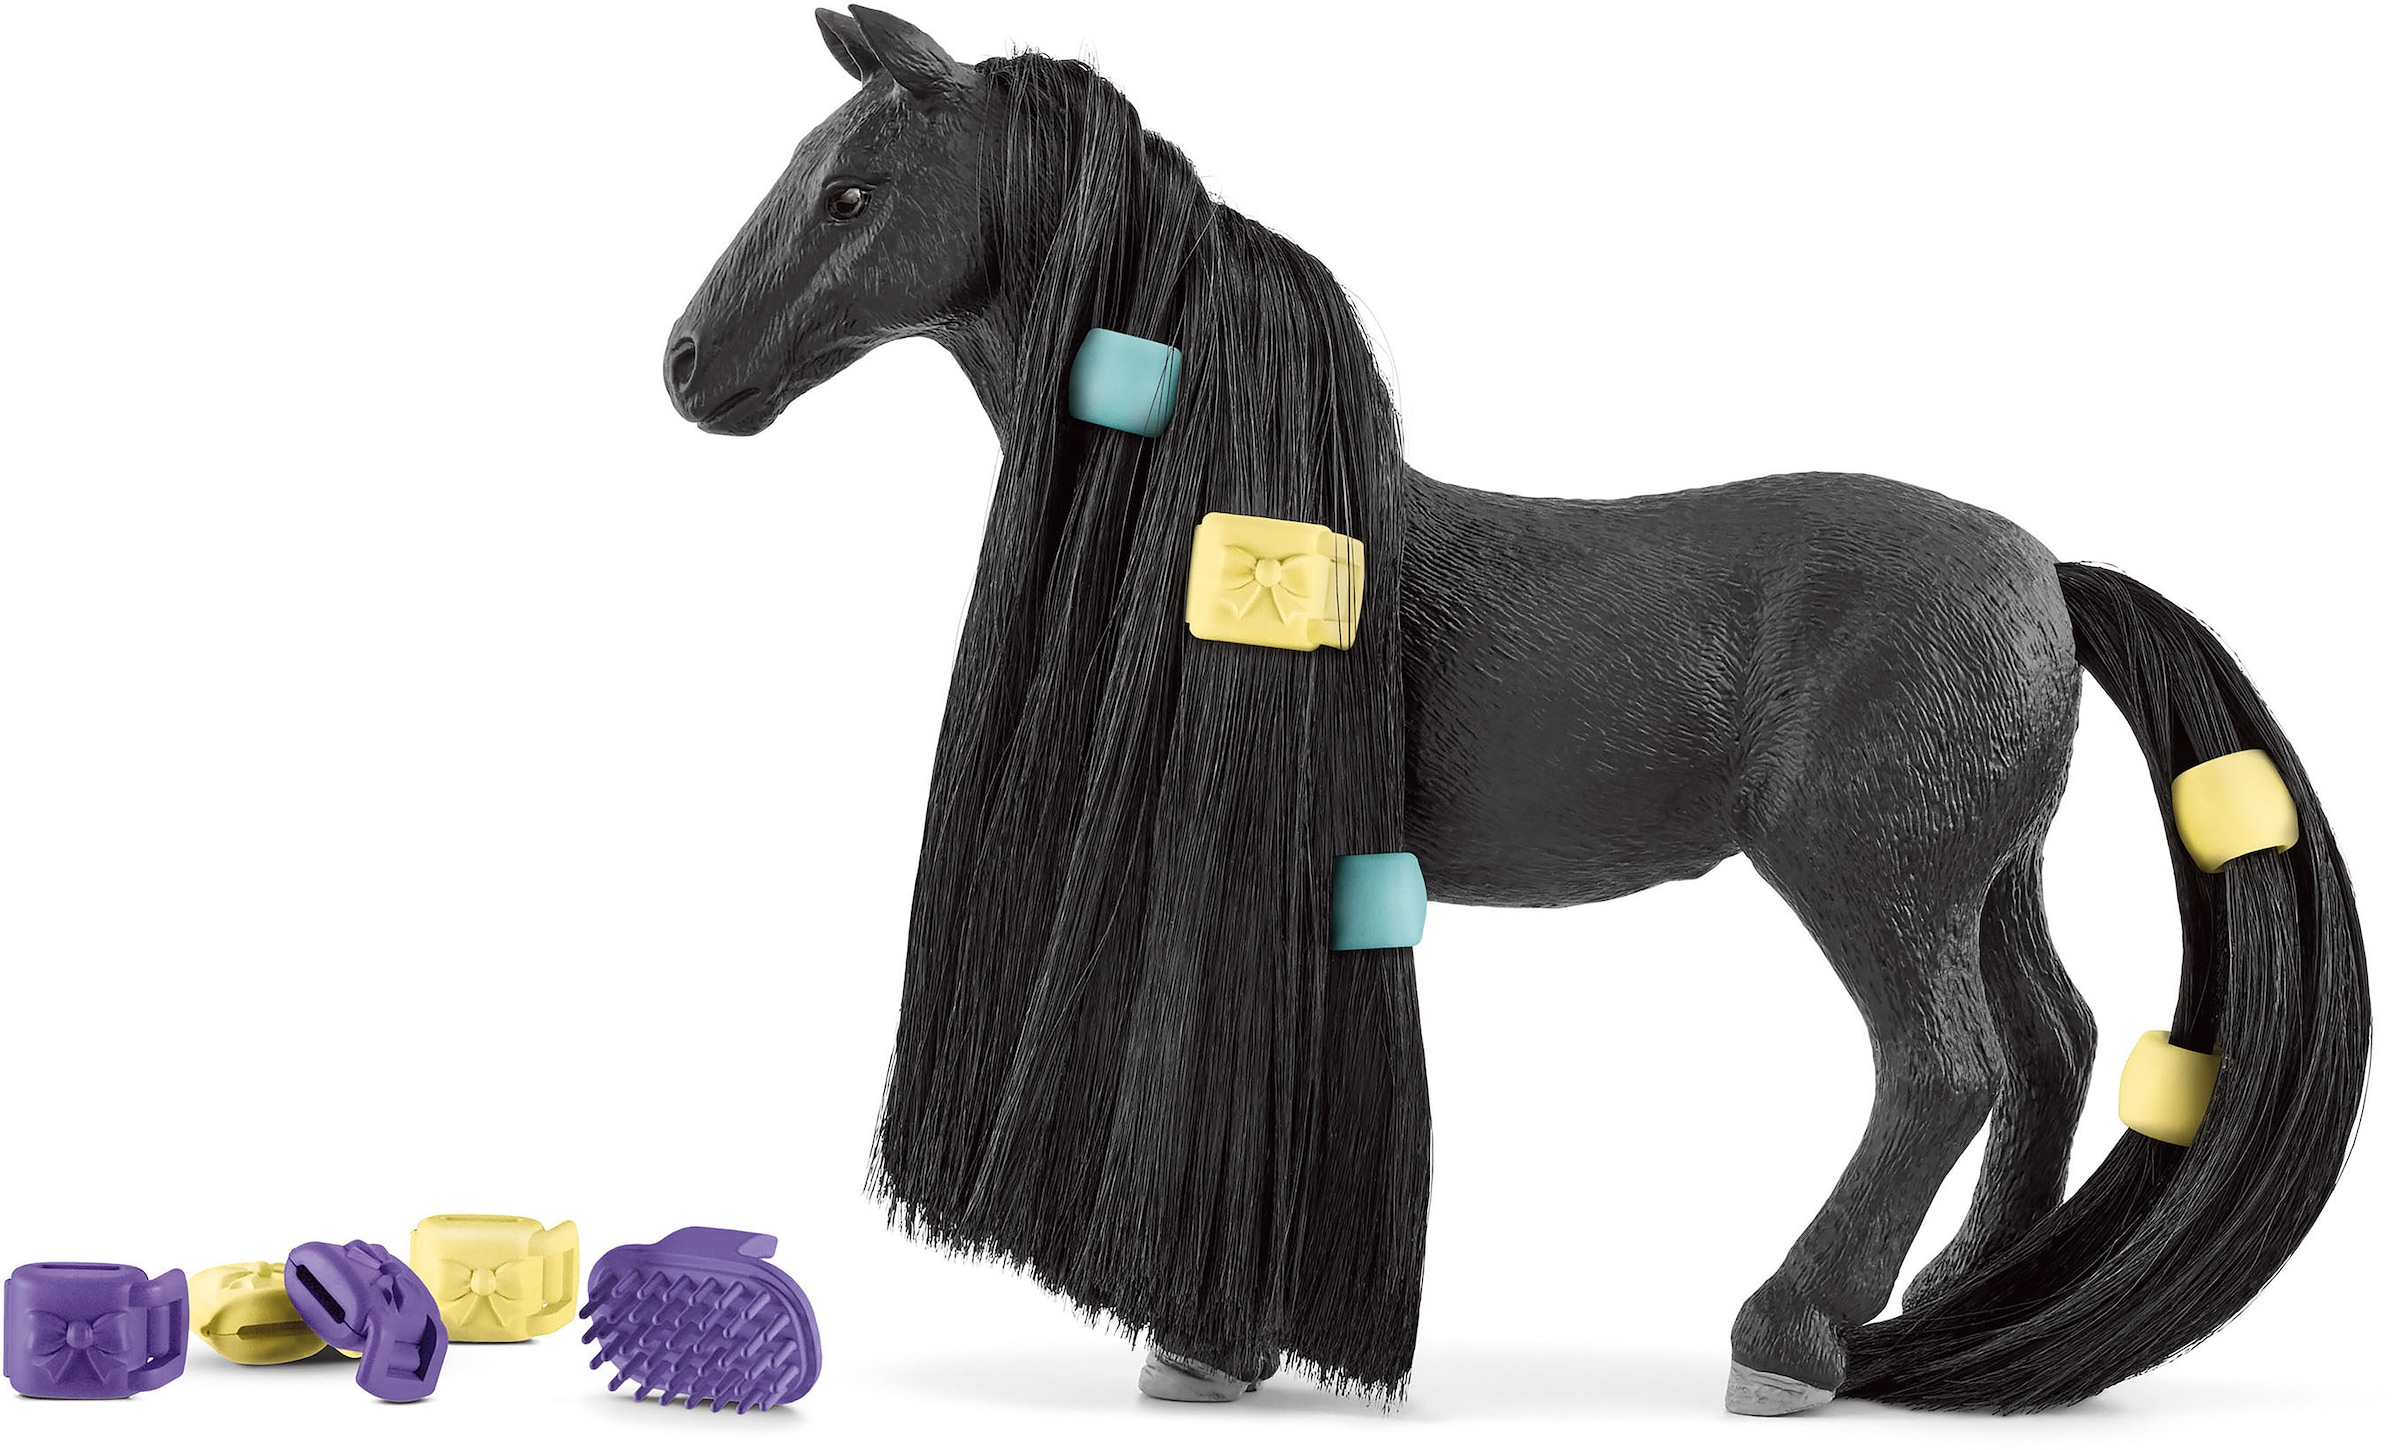 Schleich® Spielfigur »HORSE CLUB, Beauty Horse Criollo Definitivo Stute (42581)«, Sofia's Beauties